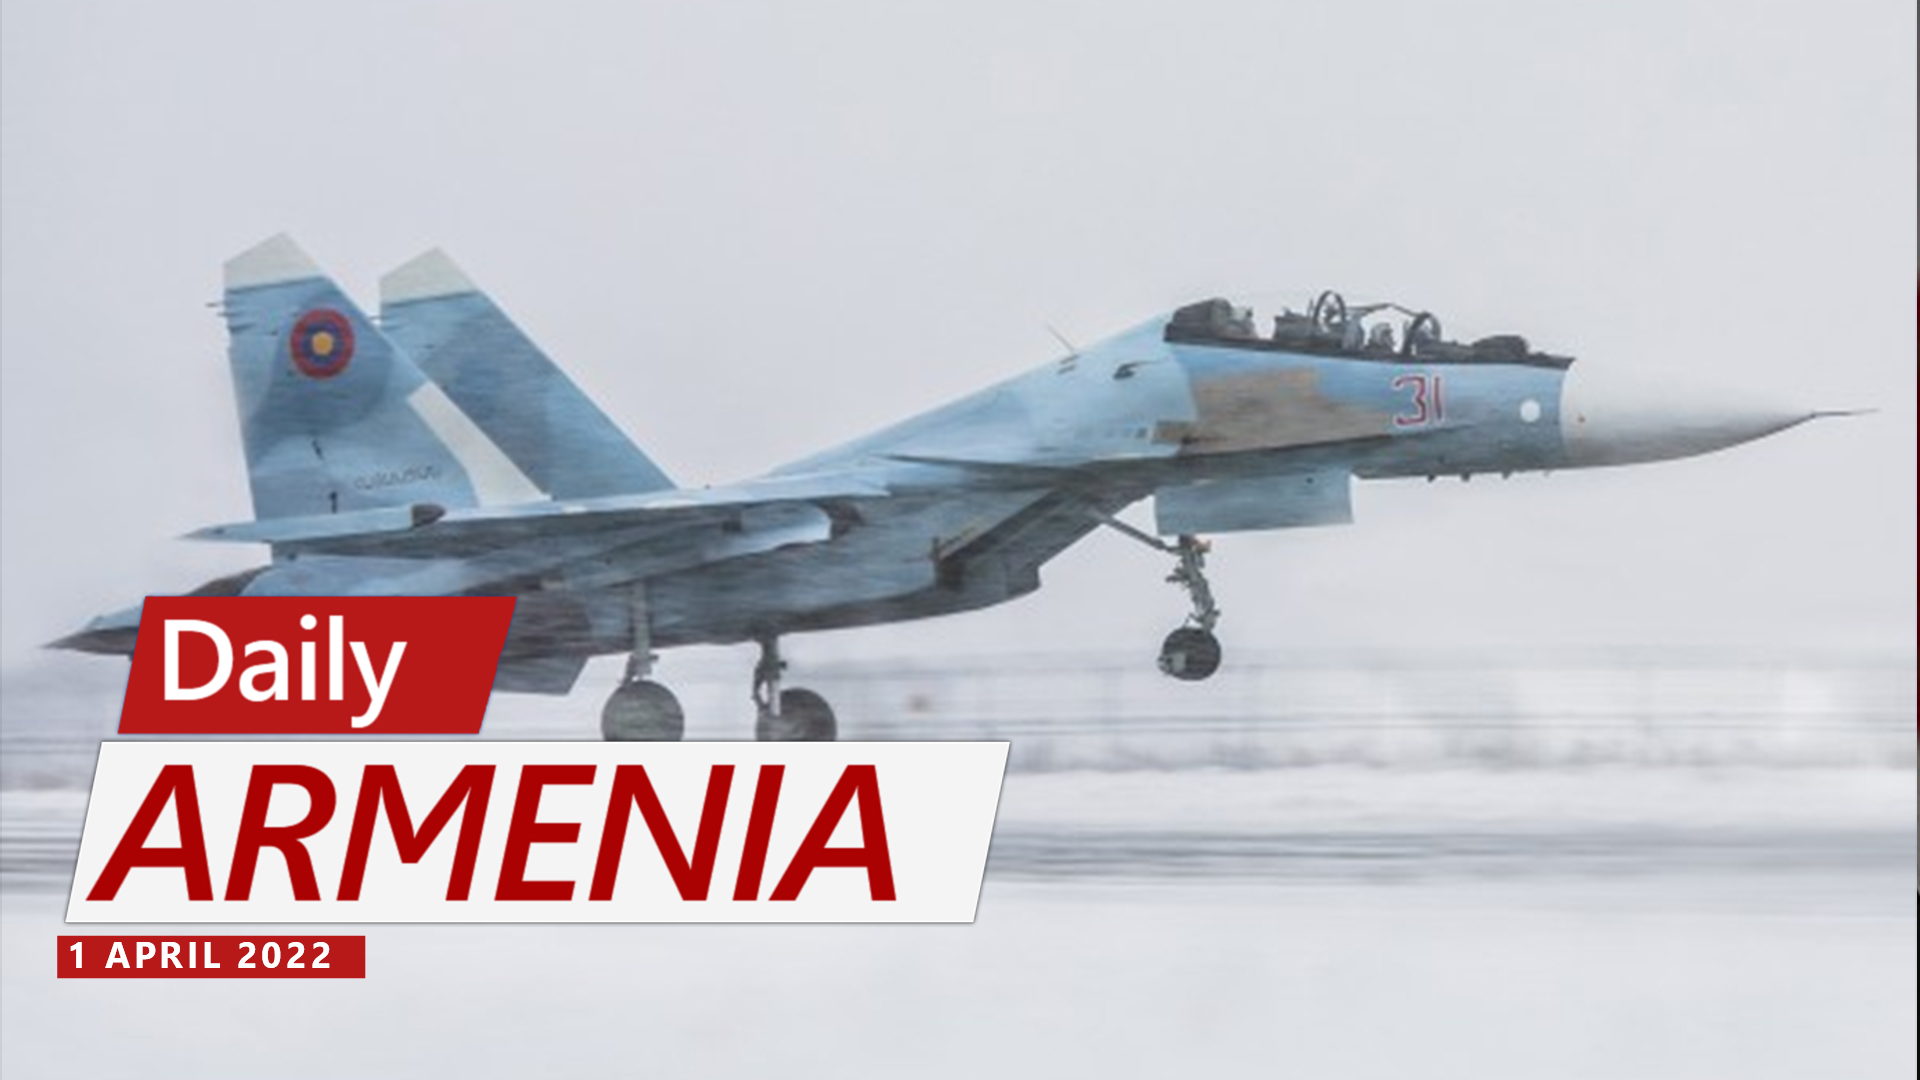 EU, NATO debunk disinformation about Armenia sending fighter jets to Russia